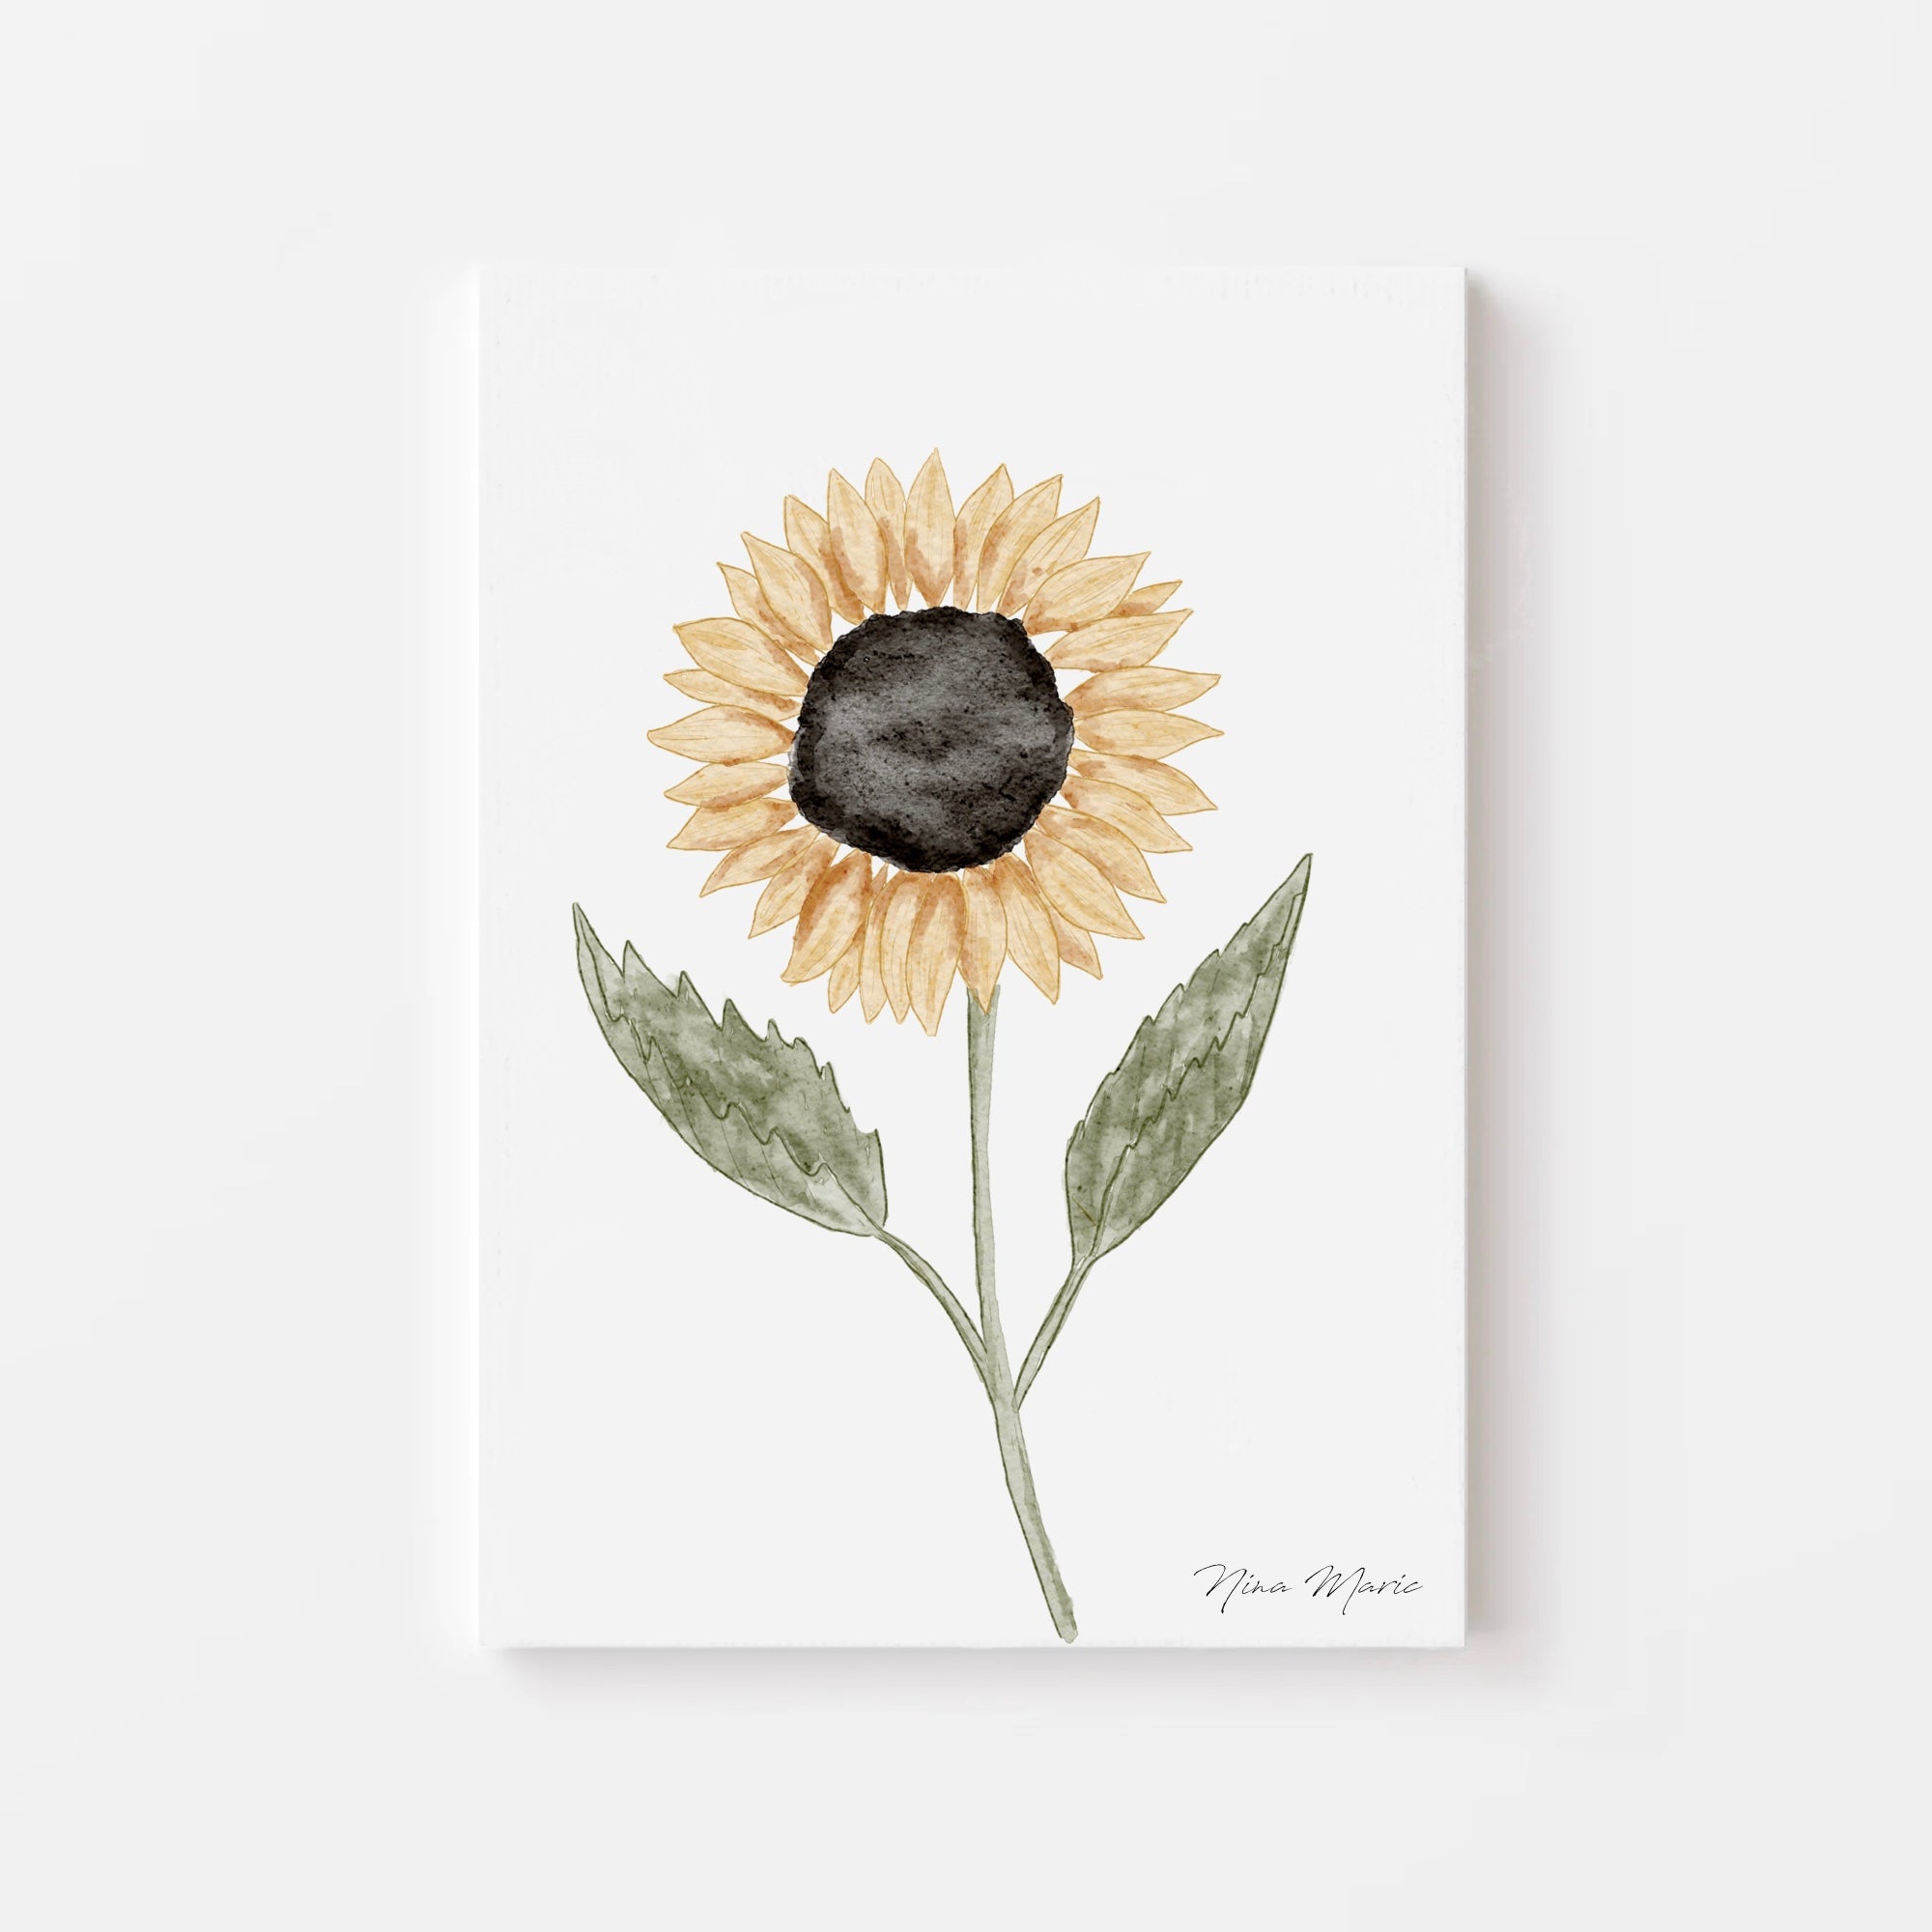 Sunny Splendor: Watercolor Sunflower Print by Nina Maric